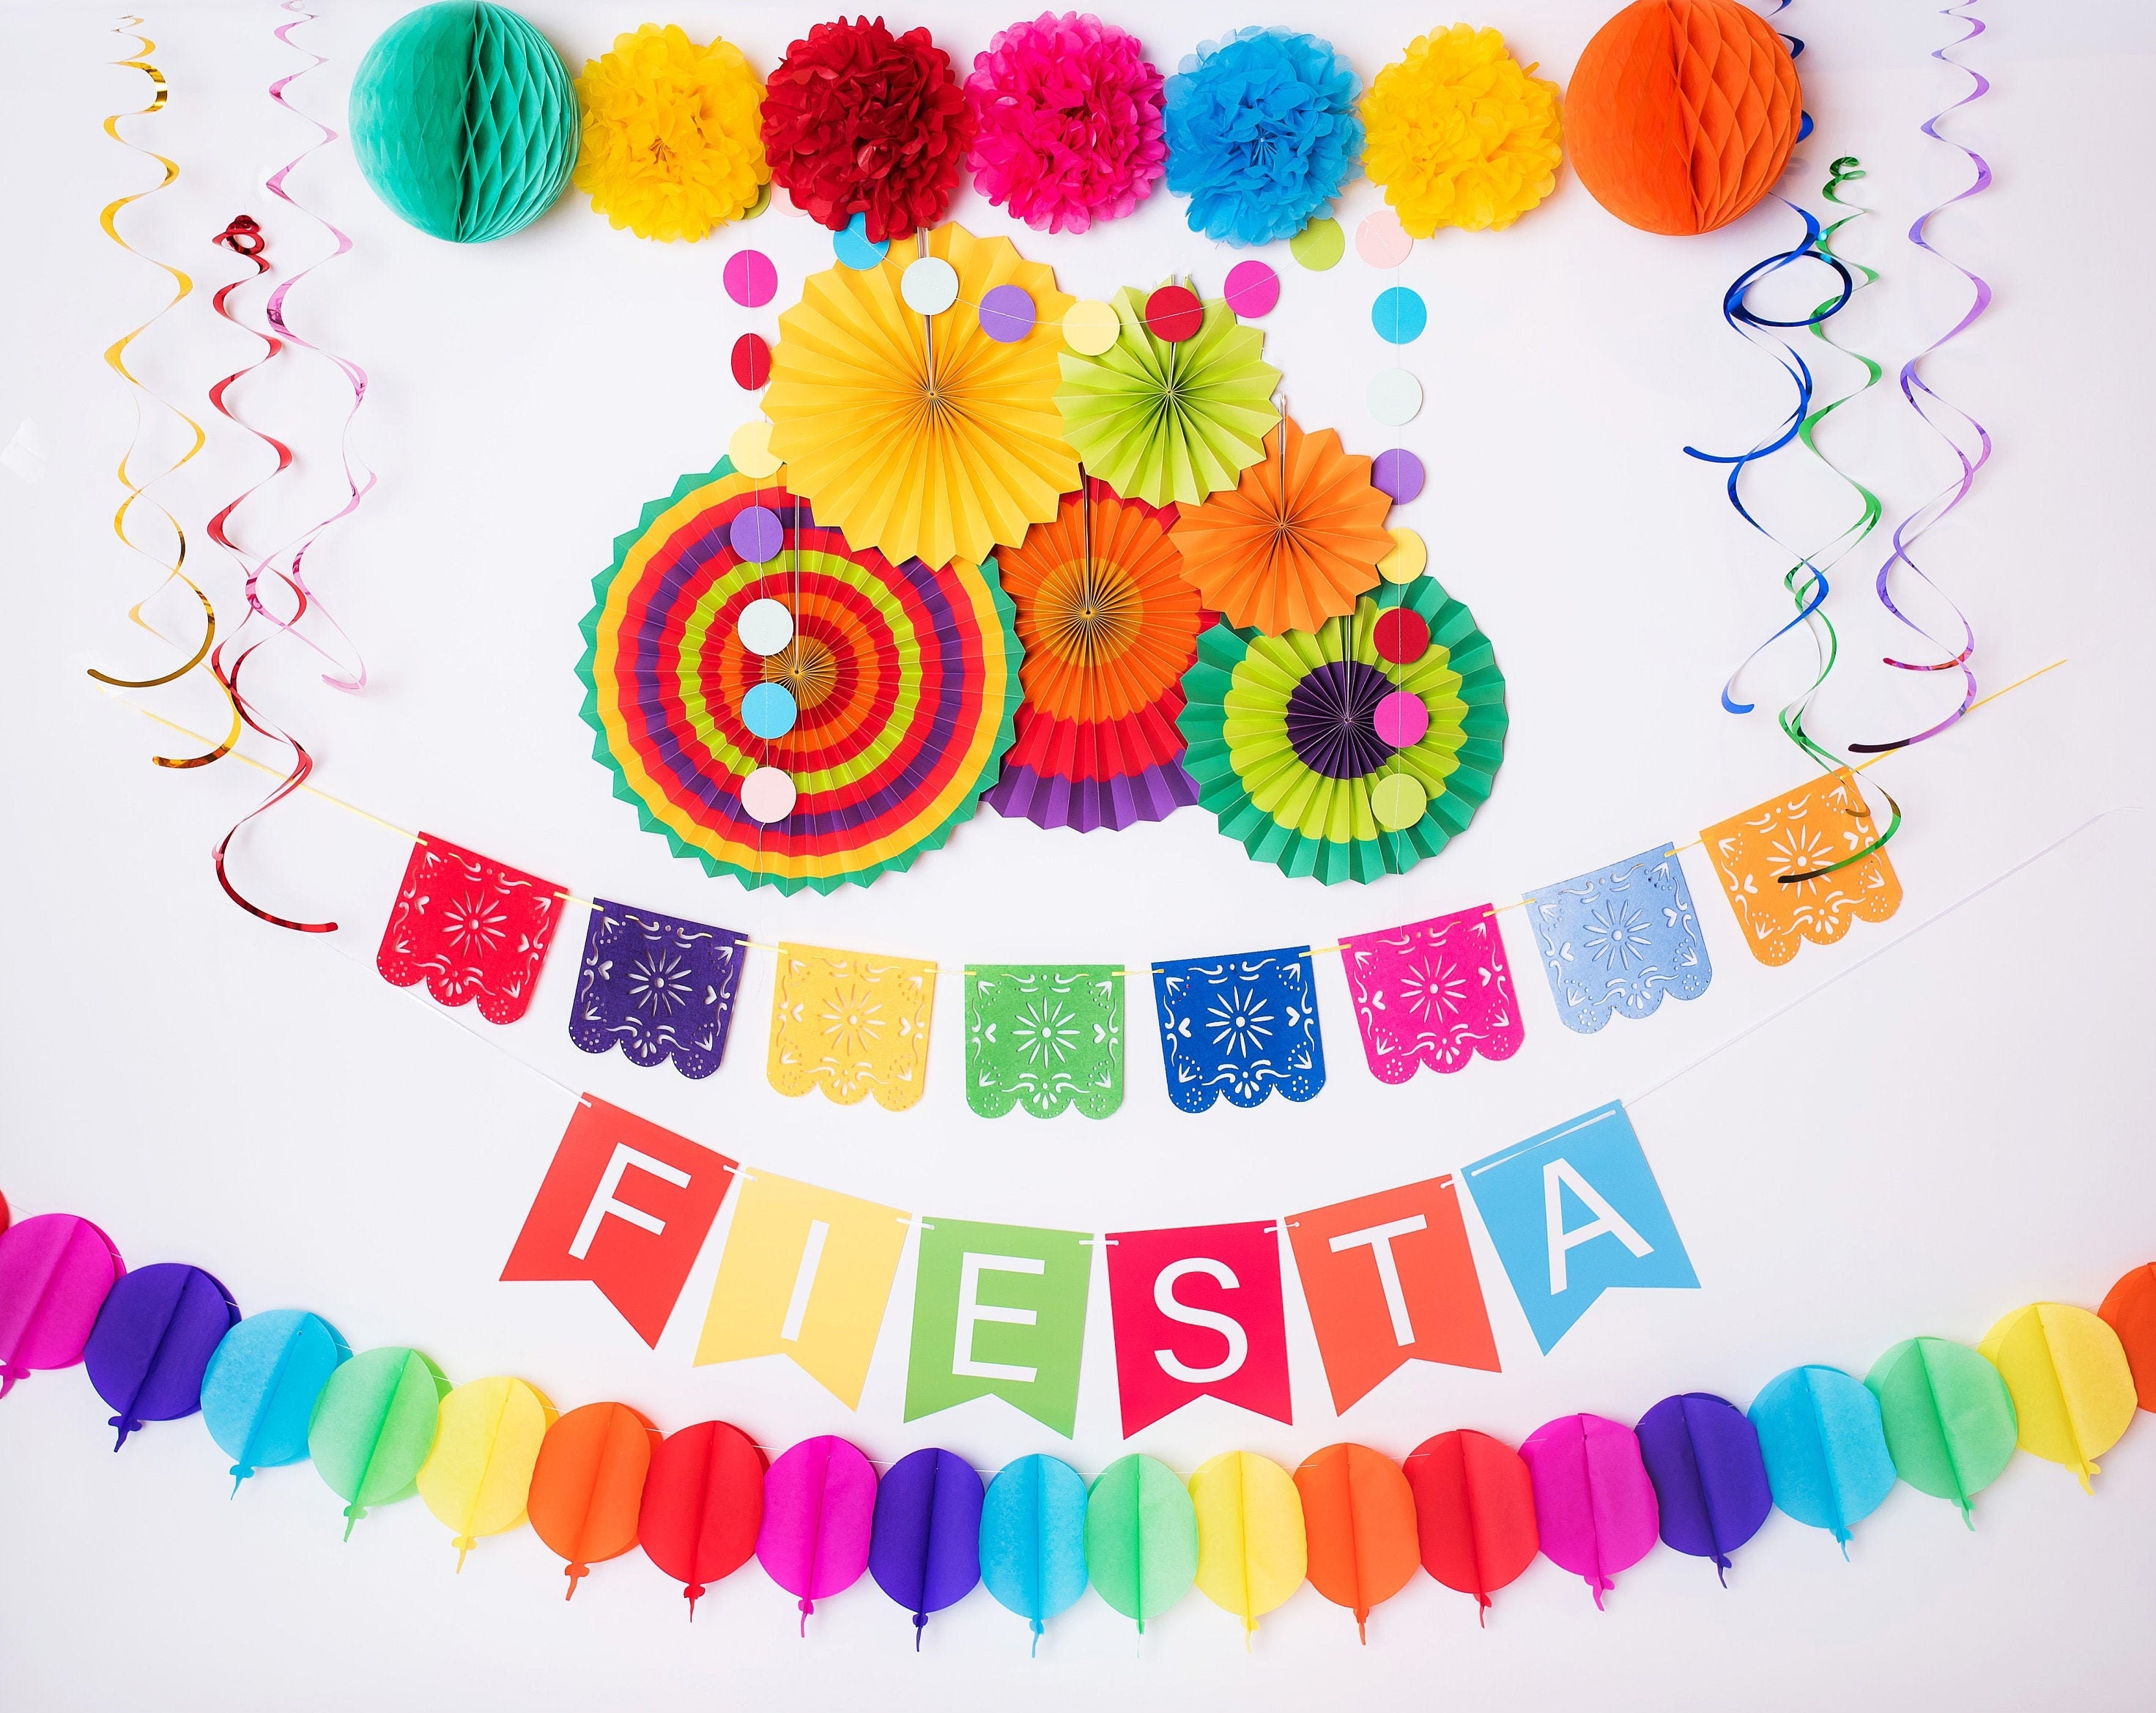 Mexican Party Decorations Fiesta Themed - Cinco De Mayo Party Decor for  Birthday Wedding Baby Shower Taco Twosday- Dia de Los Muertos Decor Banner